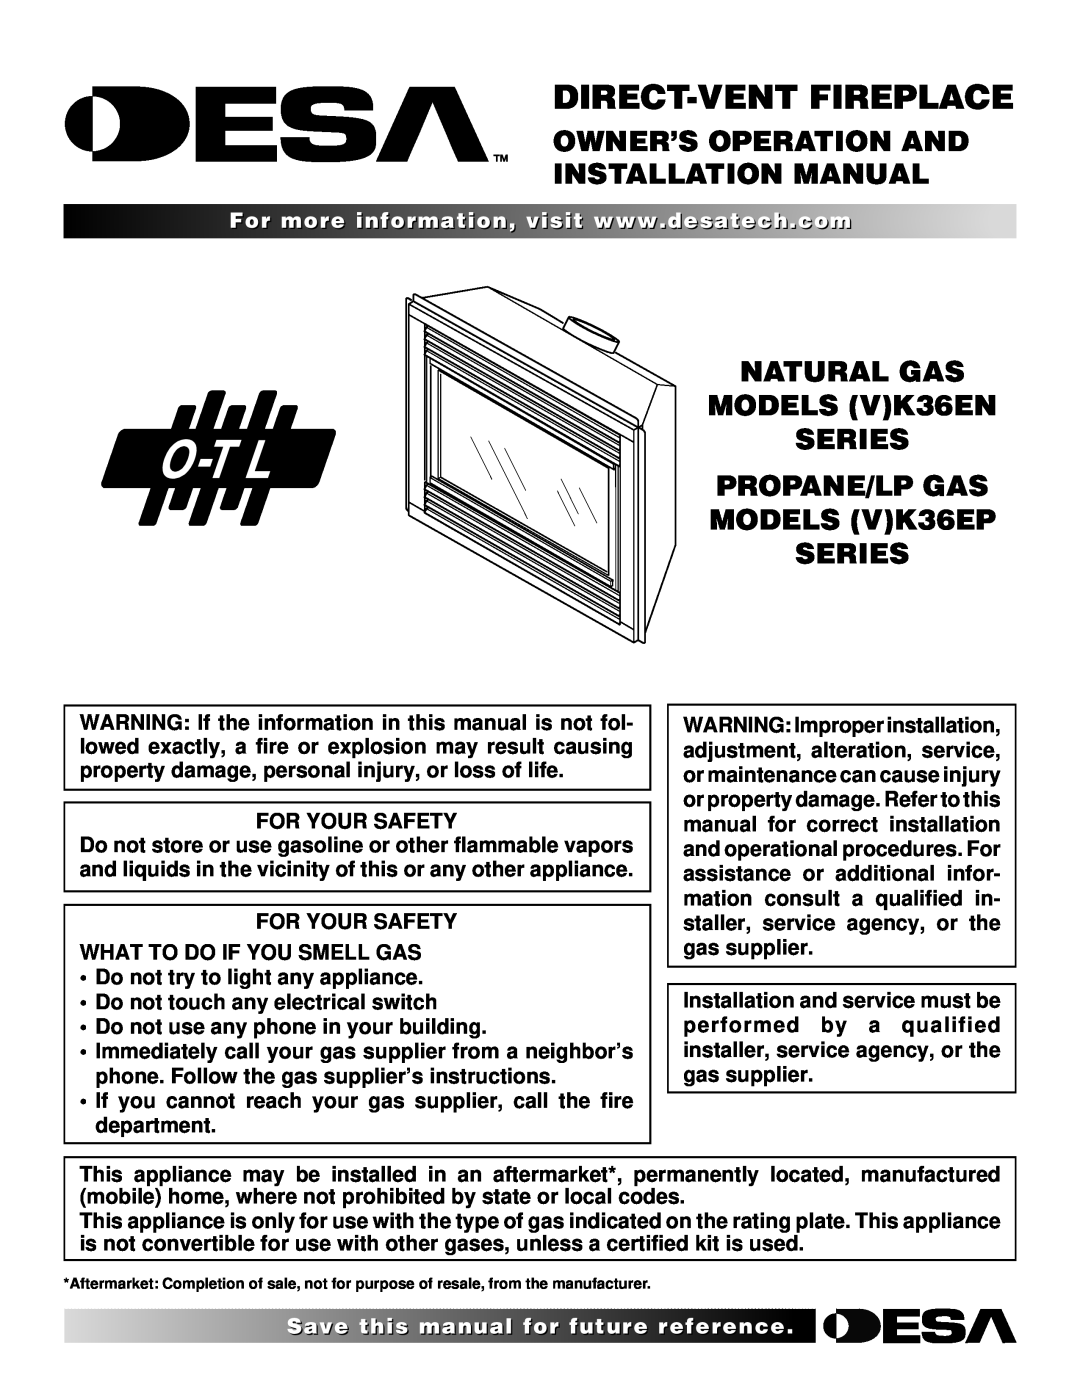 Desa installation manual Owner’S Operation And Installation Manual, NATURAL GAS MODELS VK36EN SERIES PROPANE/LP GAS 